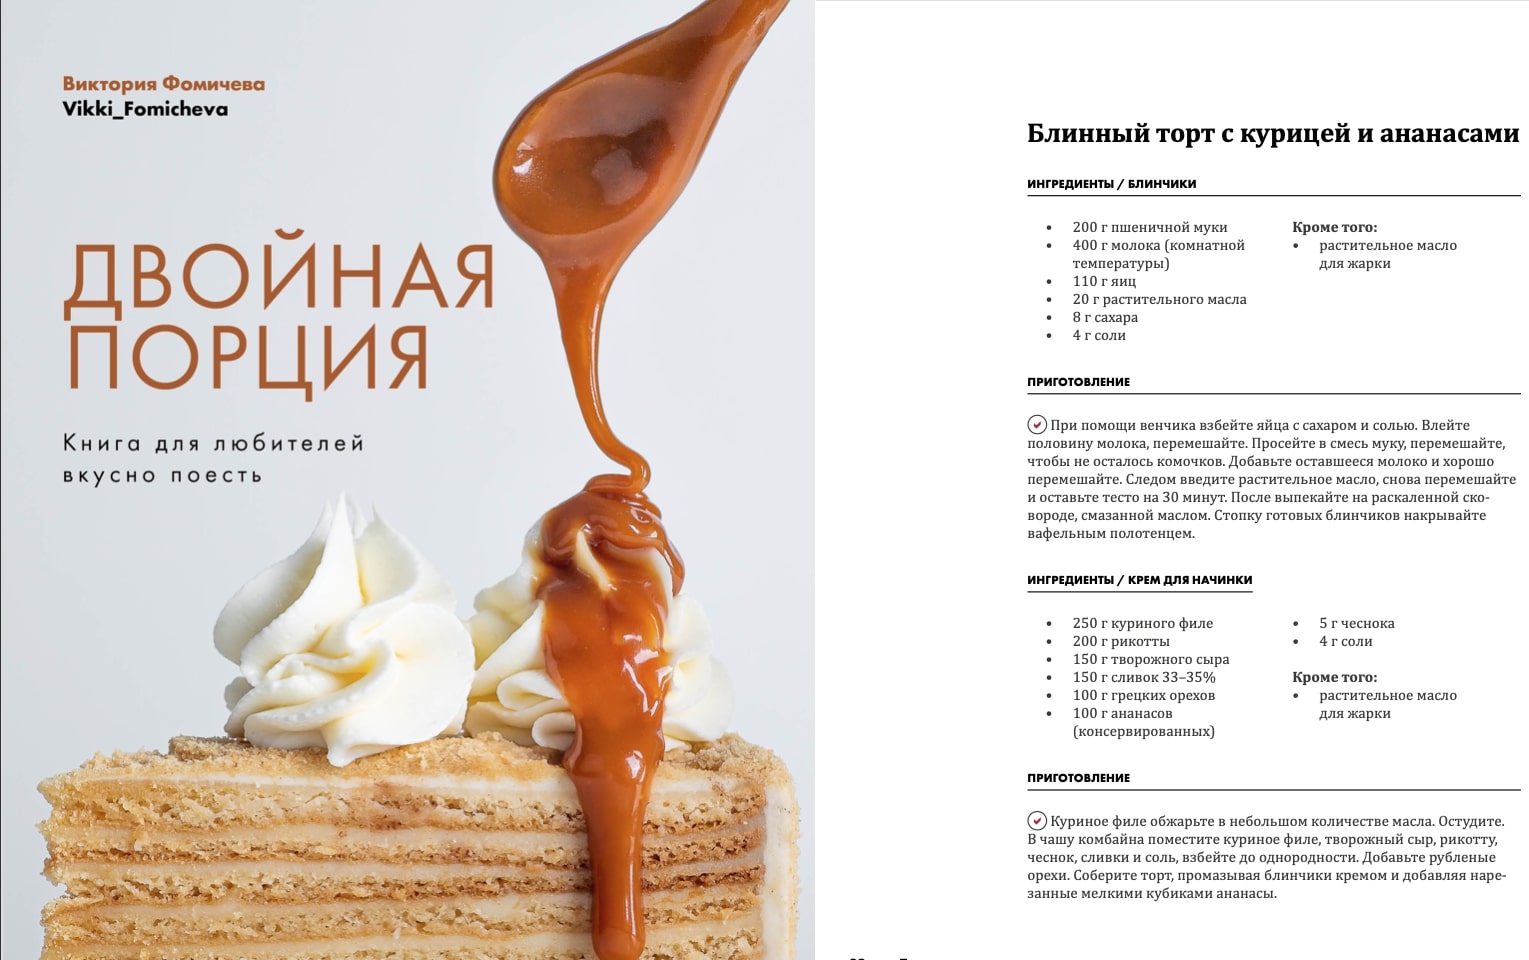 Виктория Фомичева блинный торт с курицей и ананасами Двойная порция